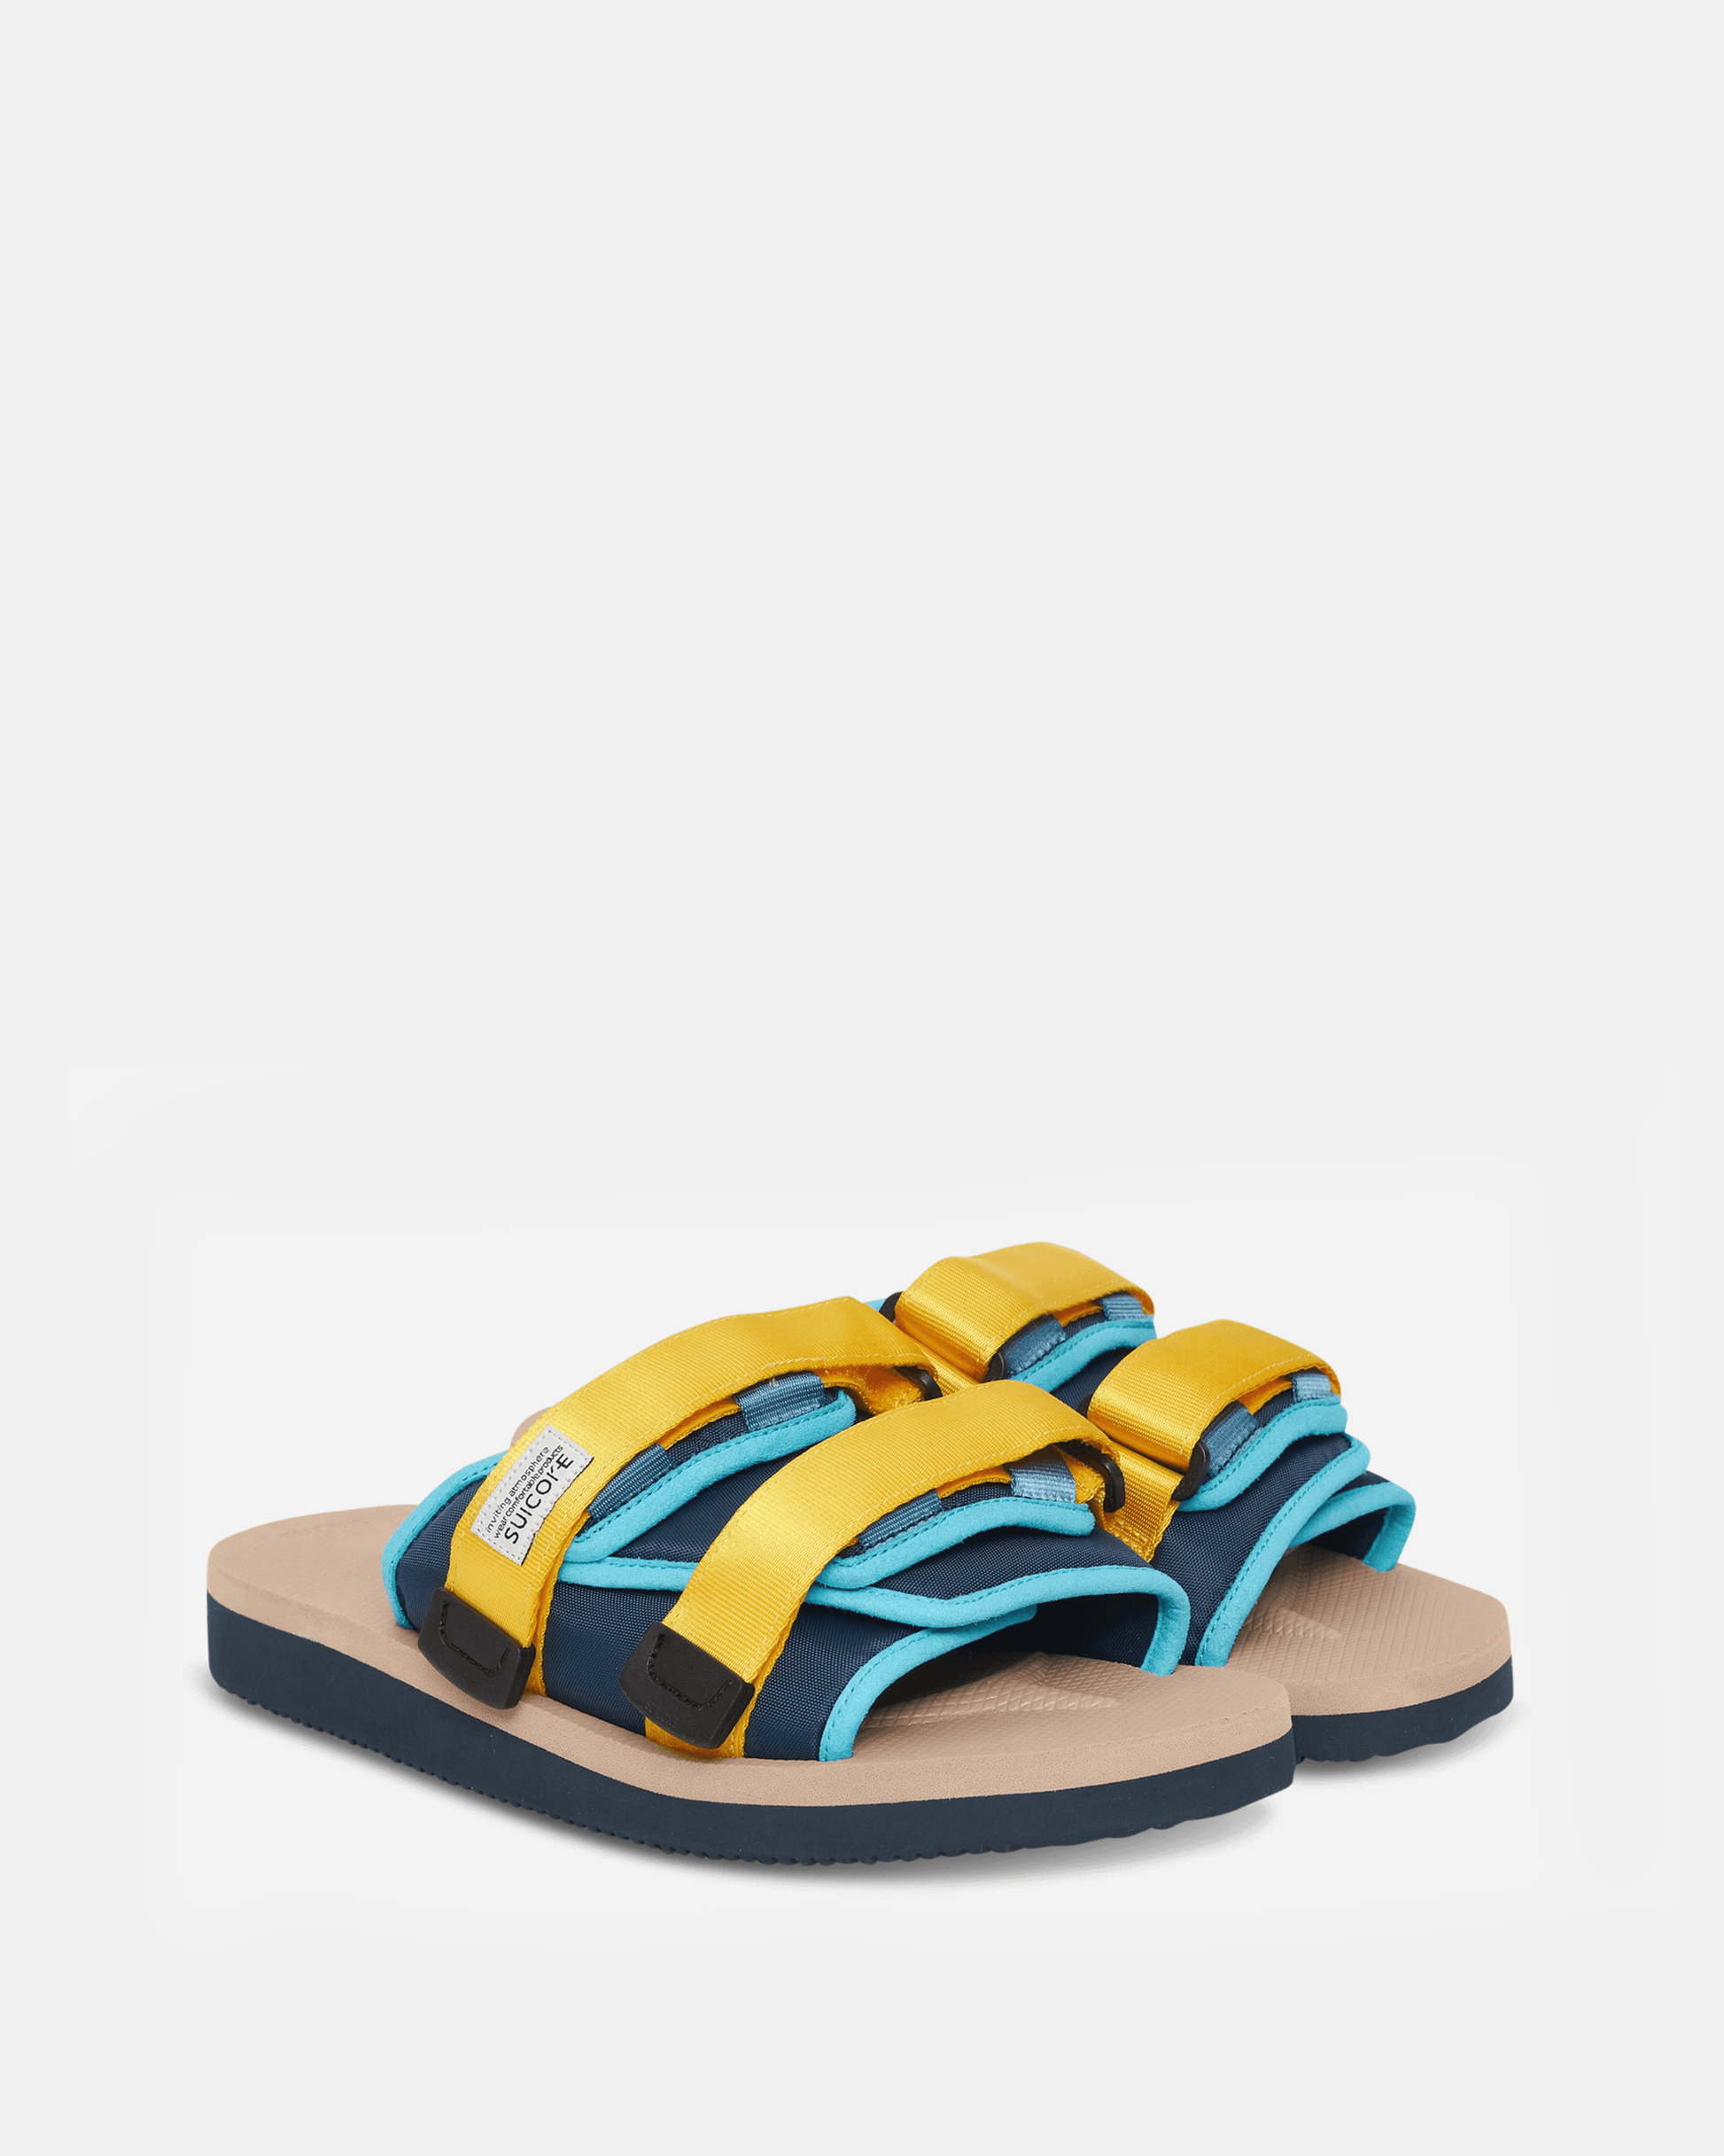 Suicoke Men's Sneakers Kaw-CAB Sandal in Navy & Yellow